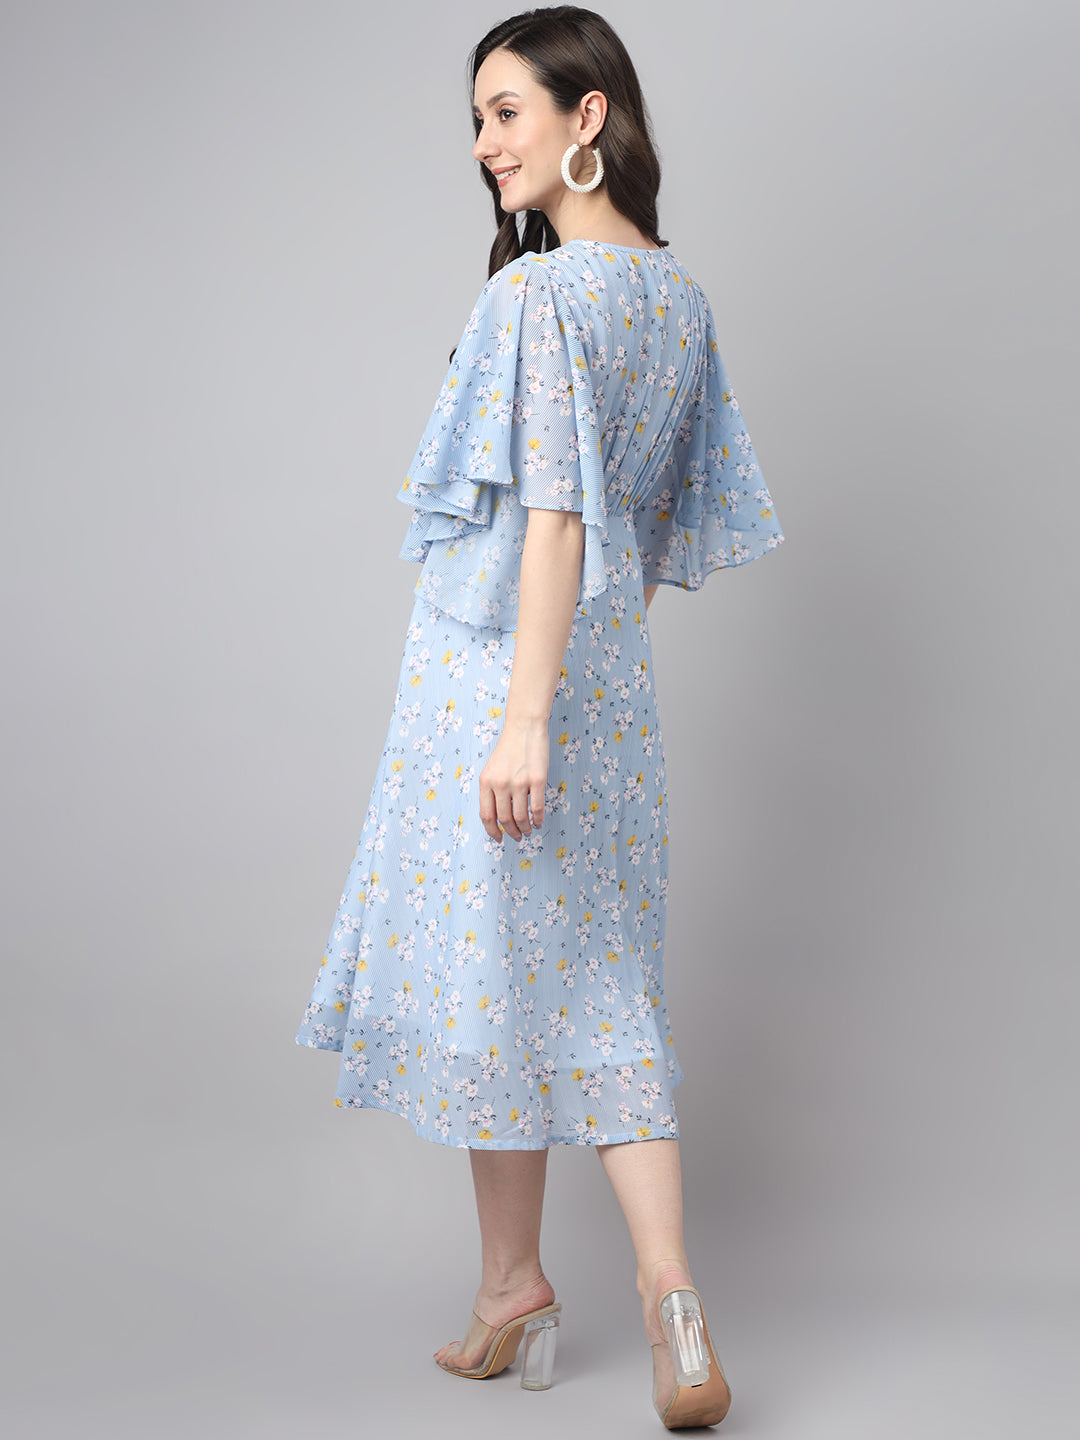 Women's Floral Printed Blue Georgette Dress - Janasya